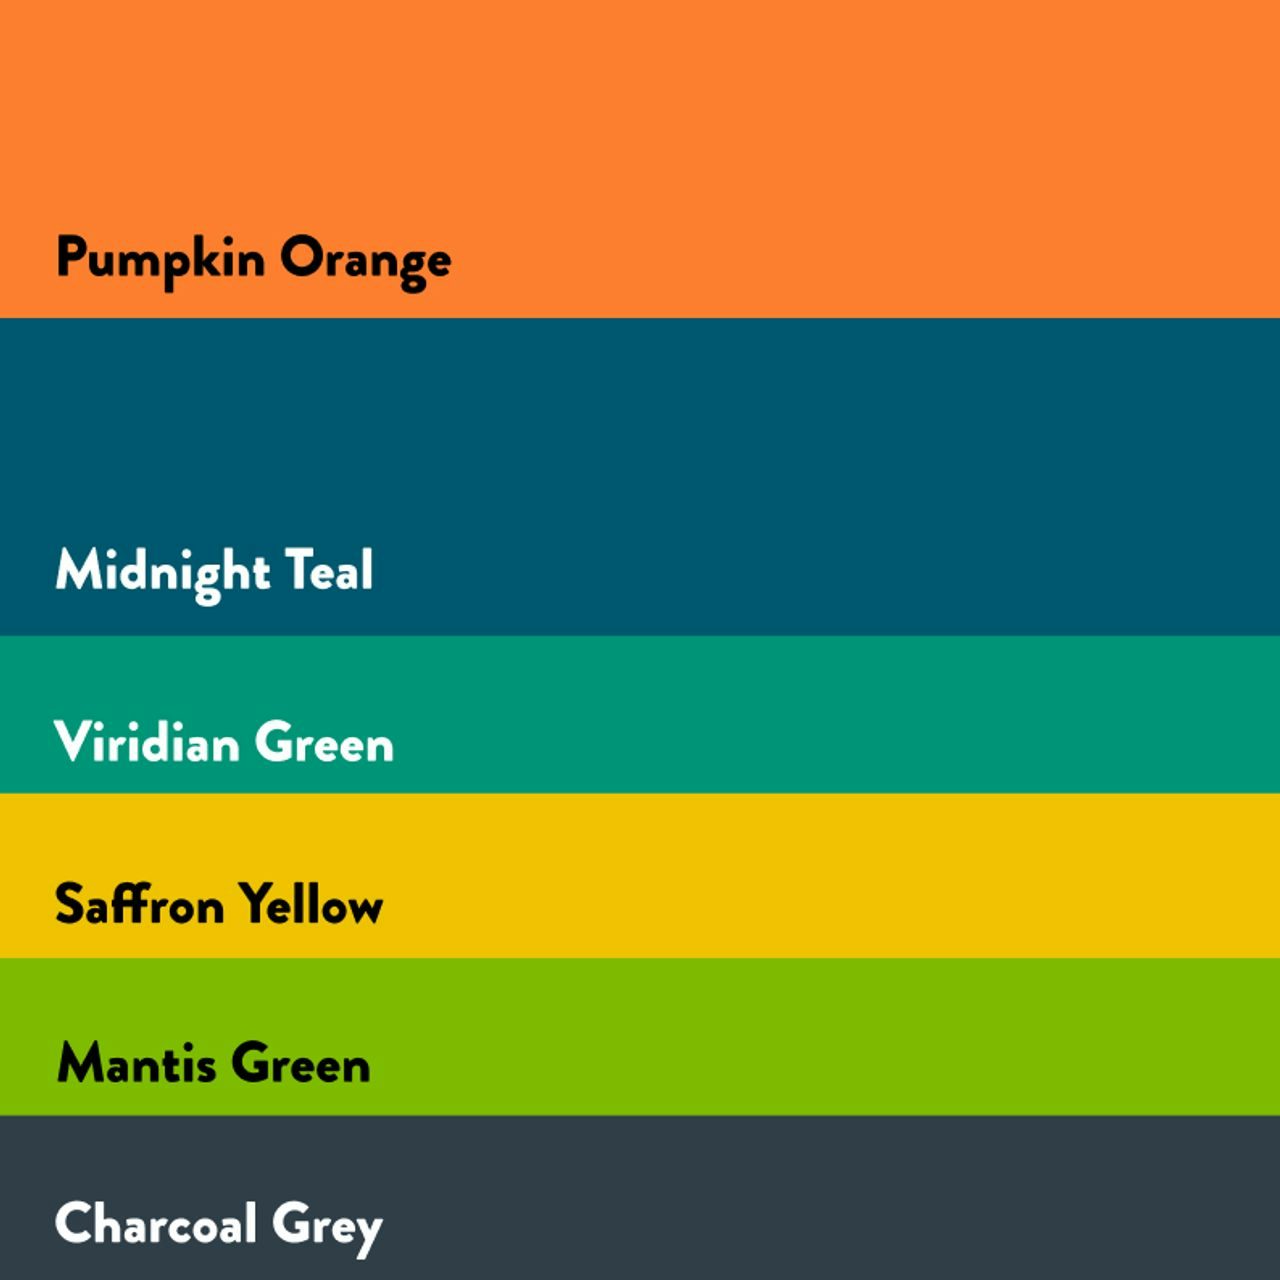 Colour palette showcasing Pumpkin Orange, Midnight Teal, Viridian Green, Saffron Yellow, Mantis Green, and Charcoal Grey.